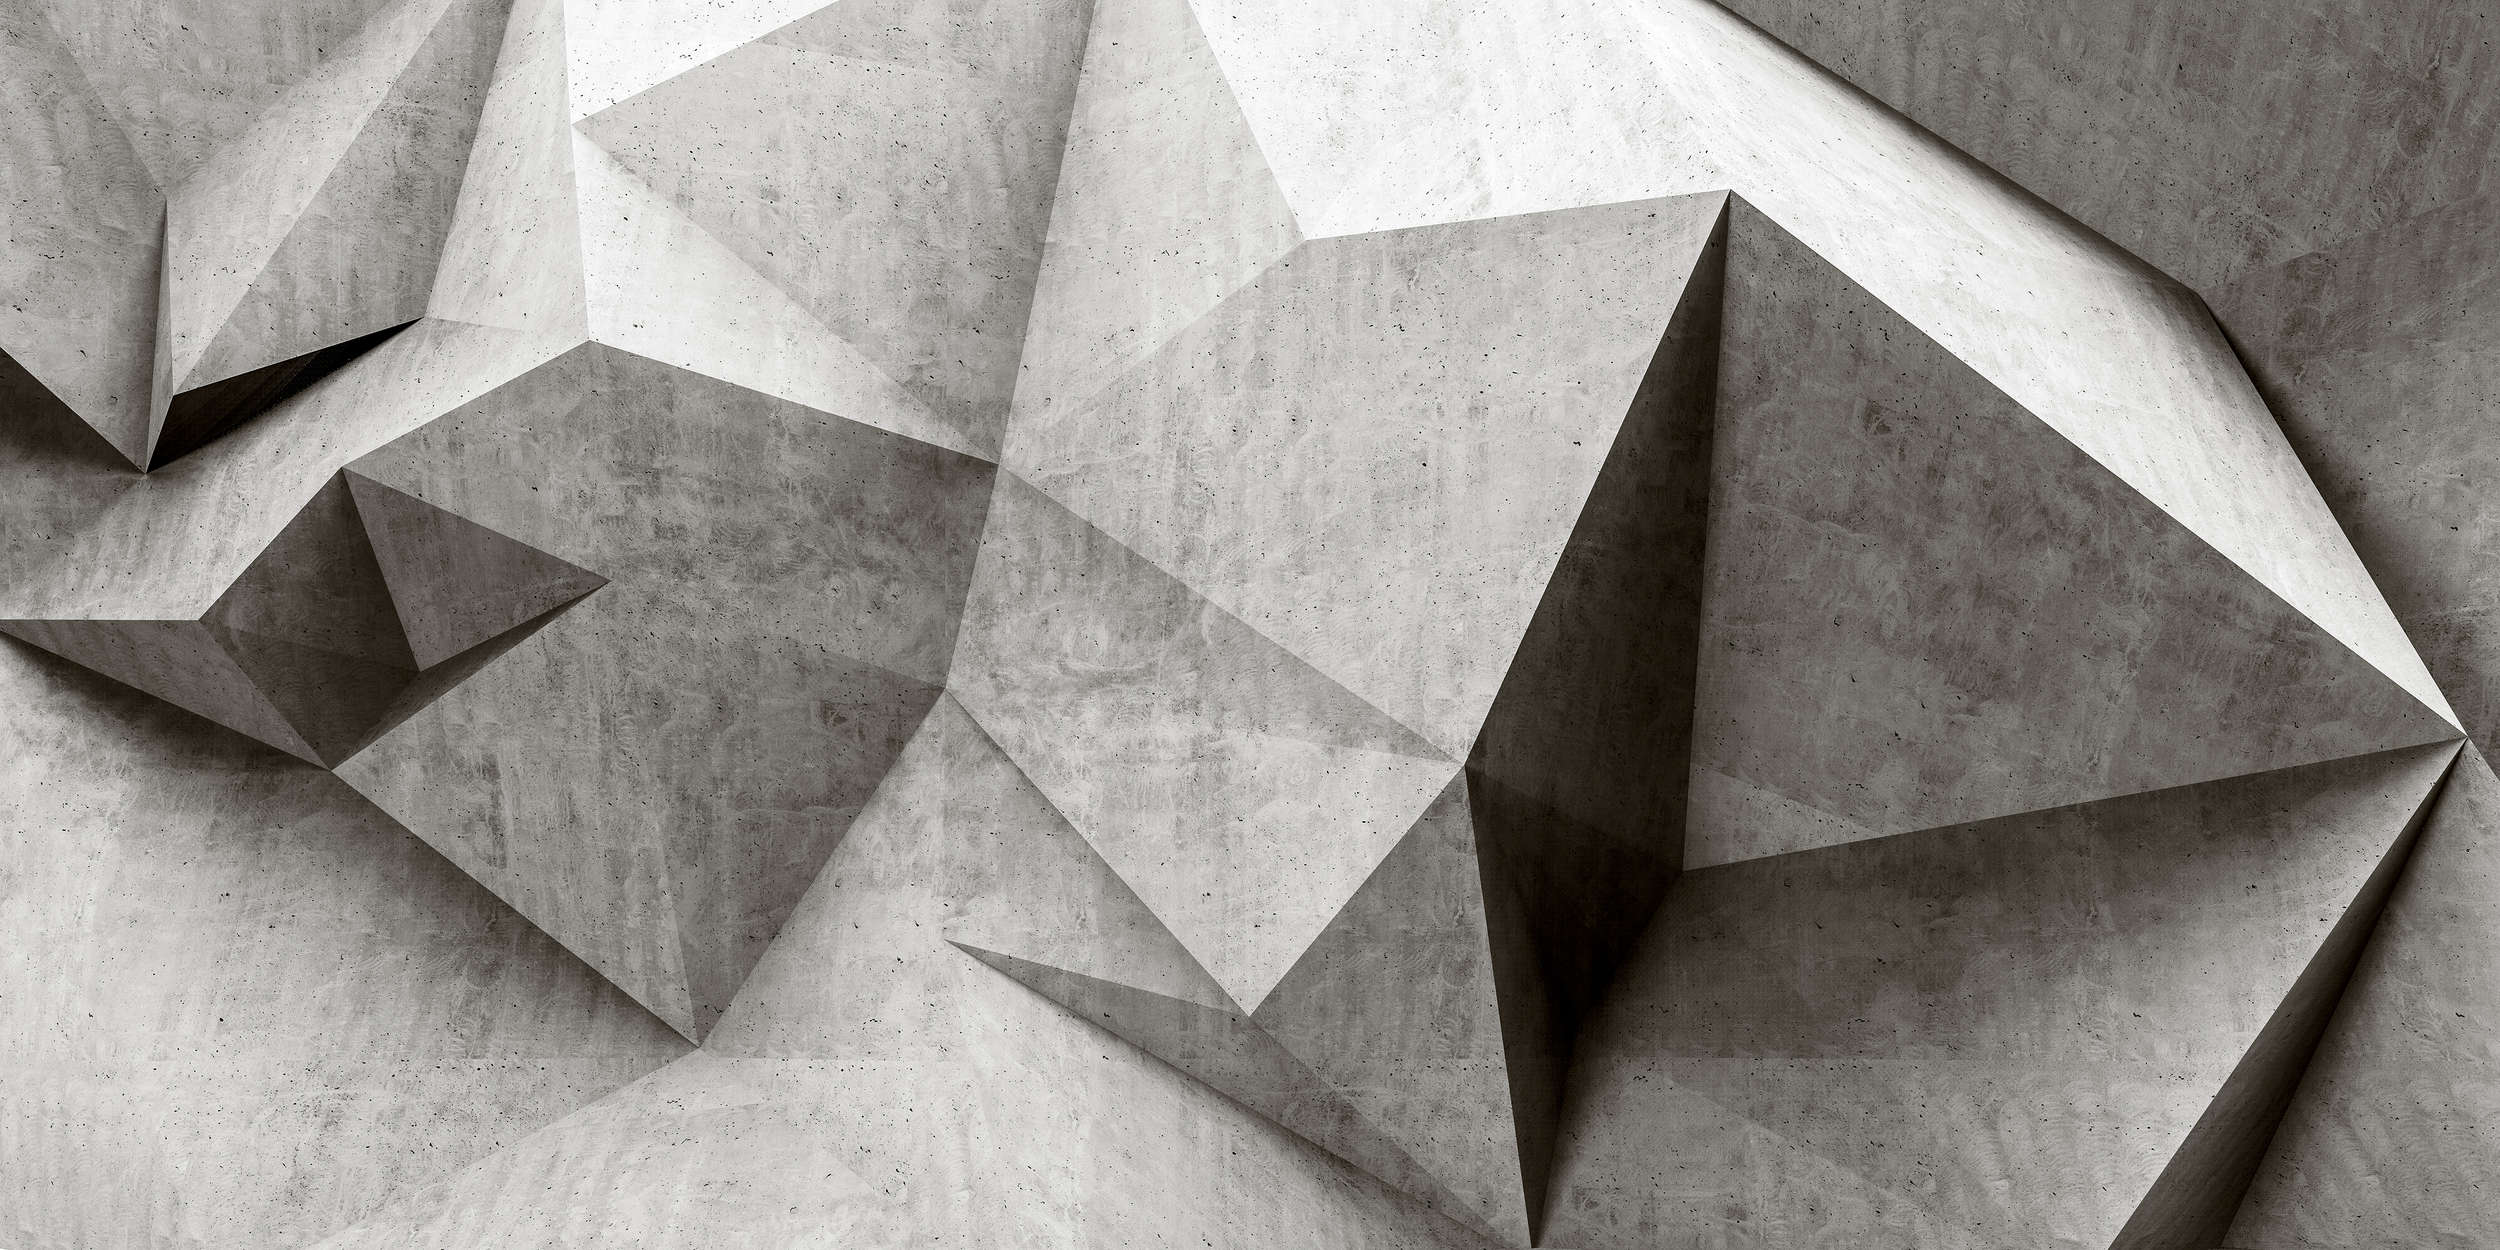             Boulder 1 - Coole 3D Beton-Polygone Fototapete – Grau, Schwarz | Mattes Glattvlies
        